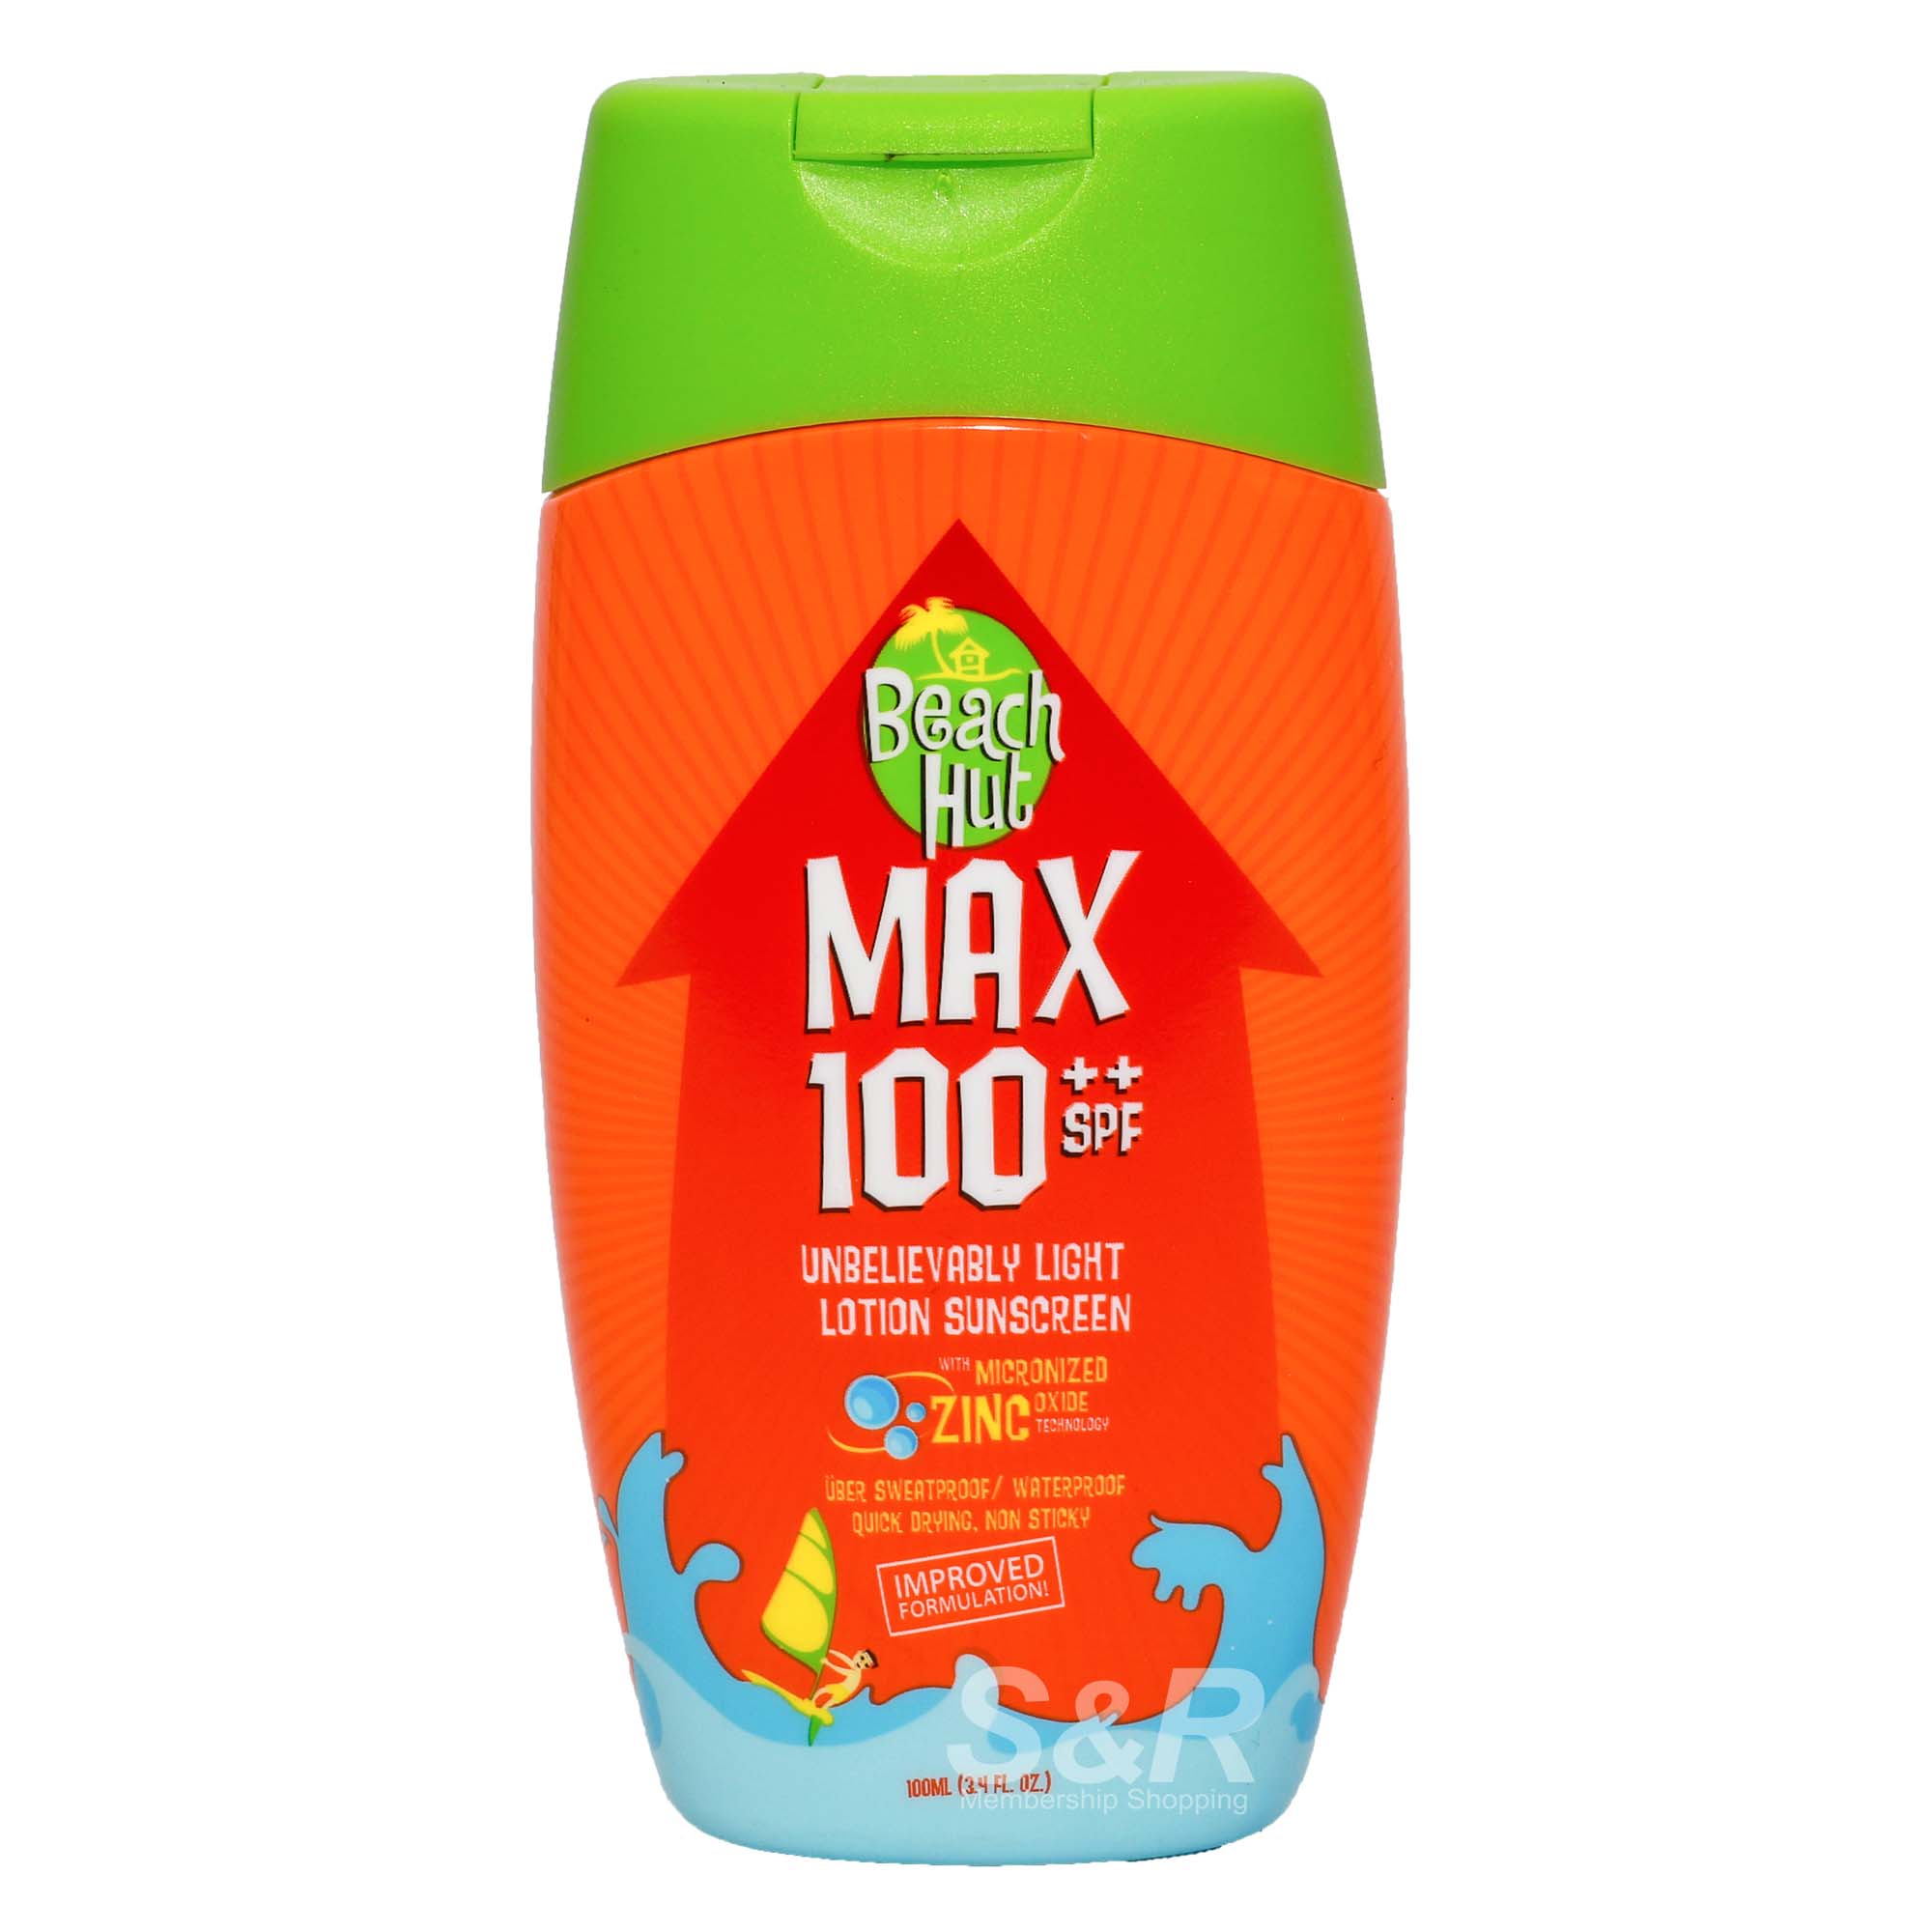 Beach Hut Max 100++ SPF Lotion Sunscreen 100mL